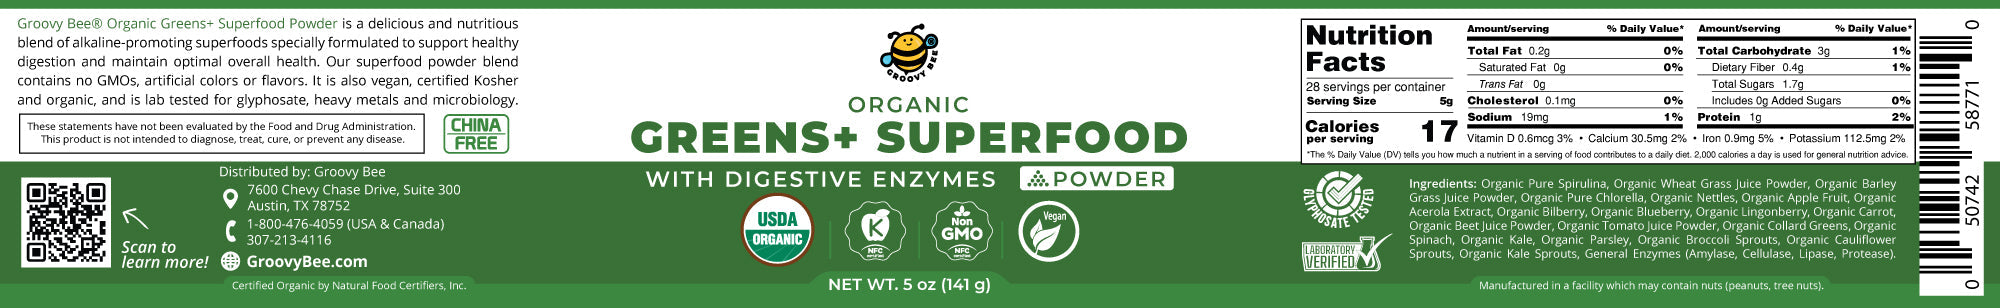 Organic Greens+ Superfood Powder With Digestive Enzymes 5 oz (141 g)